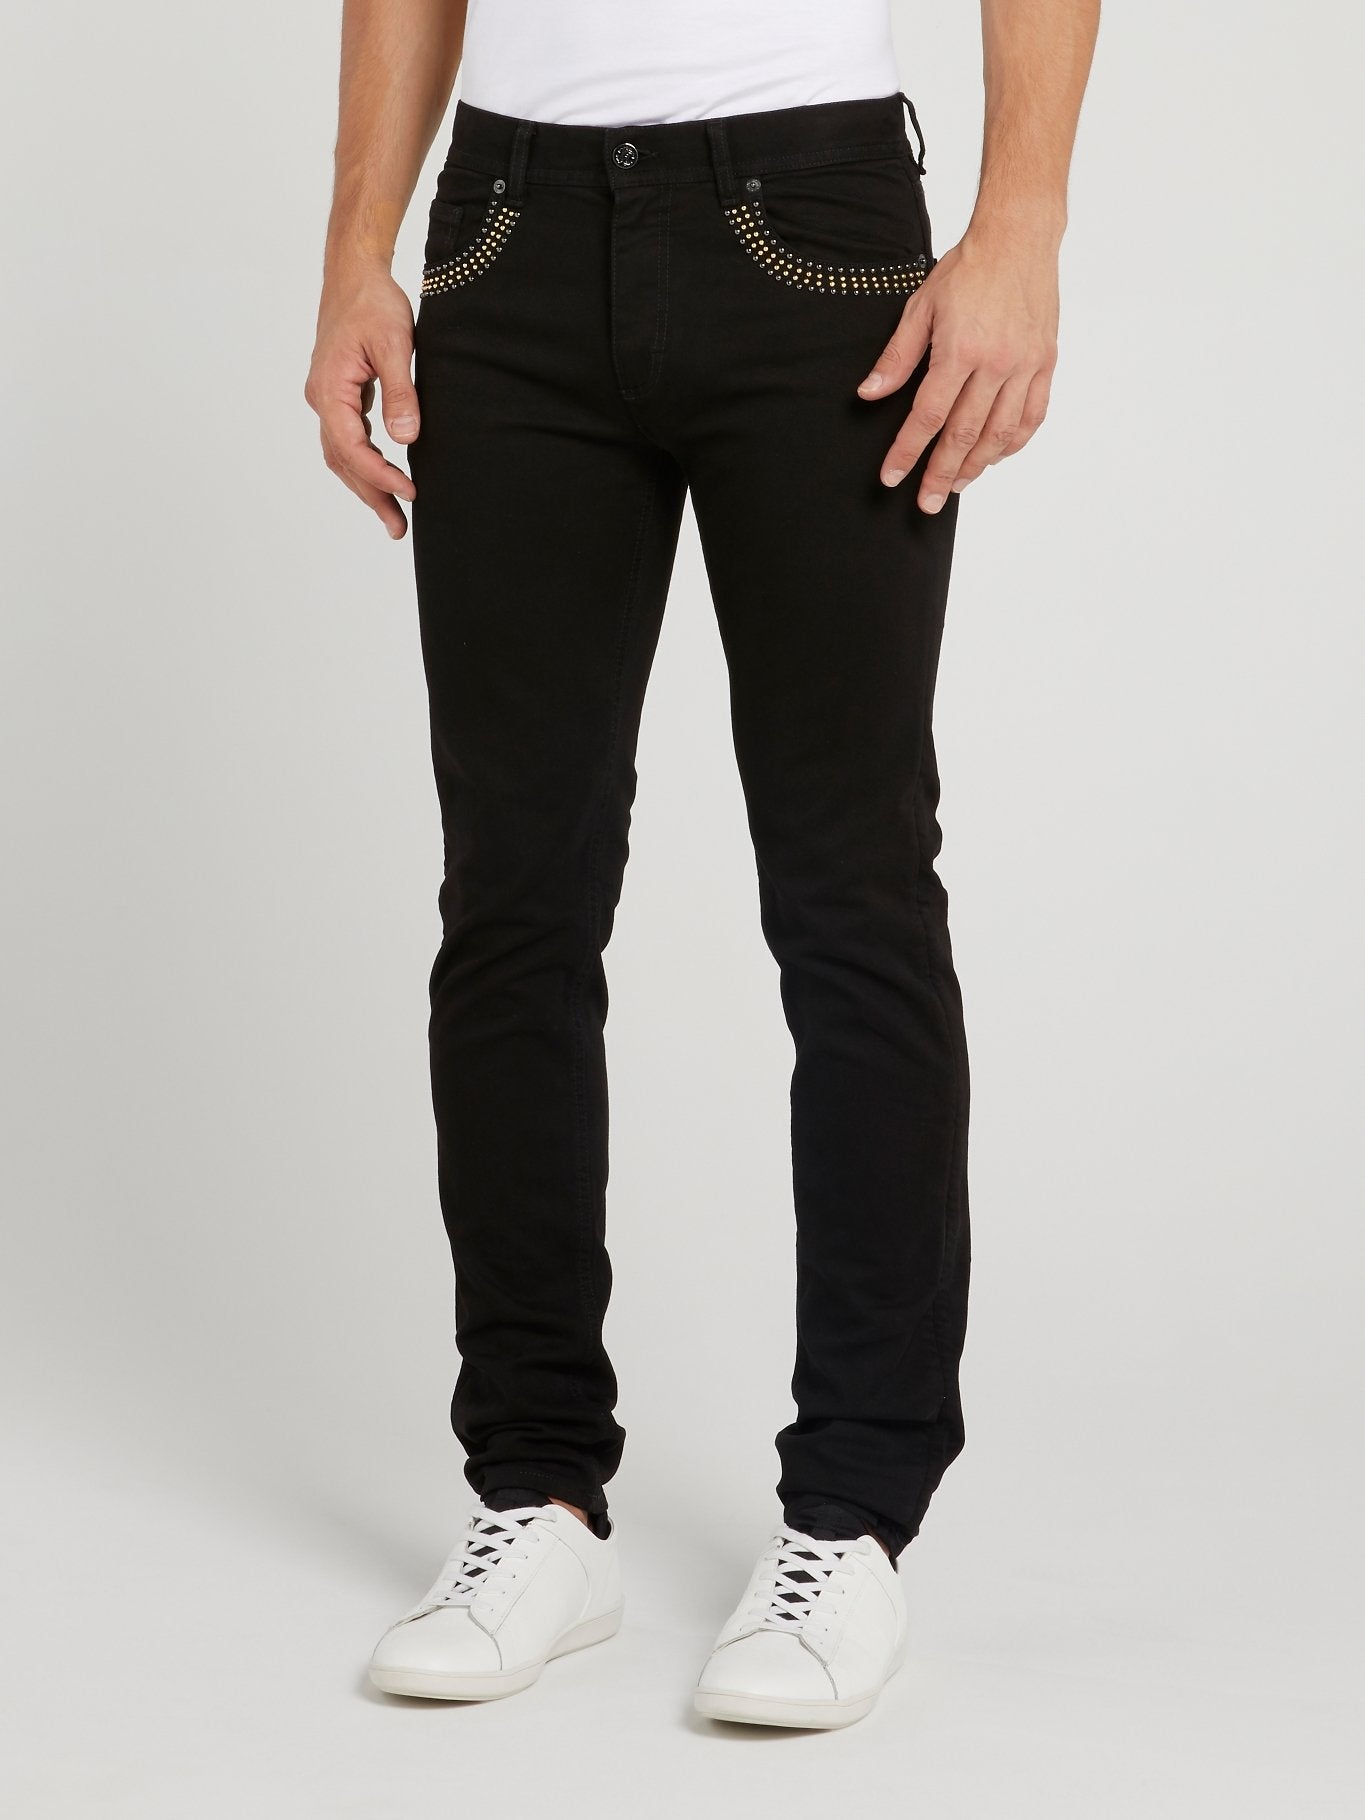 Black Stud Detail Skinny Jeans